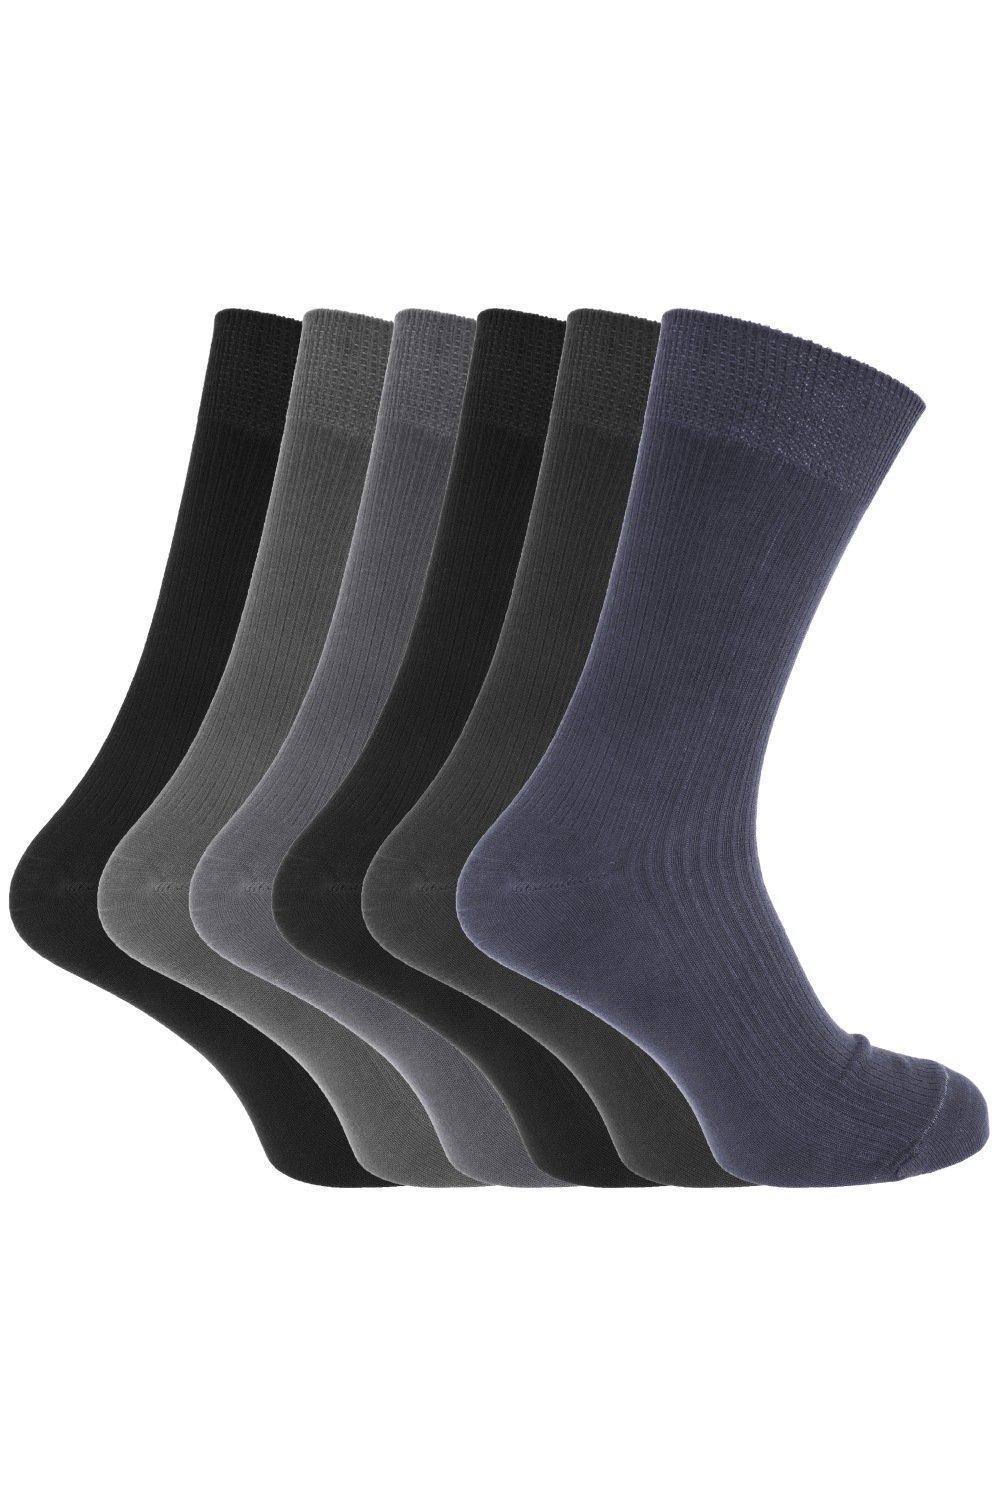 Bamboo Super Soft Breathable Ribbed Socks (6 Pairs)